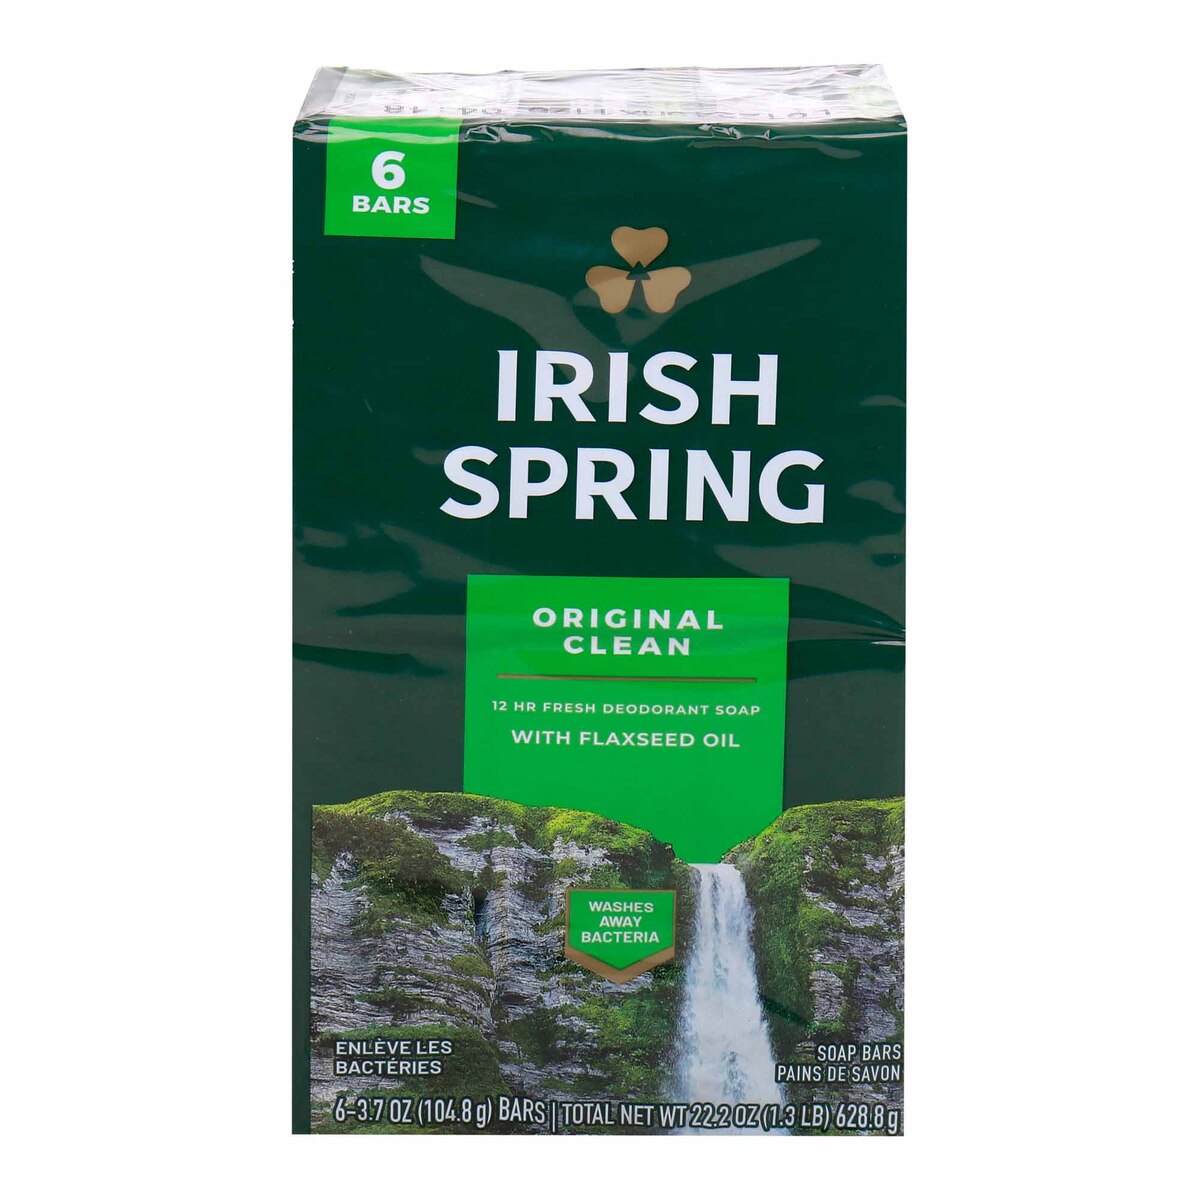 Irish Spring Original Clean Flaxseed Oil Deodorant Soap 6 pcs 628.8 g